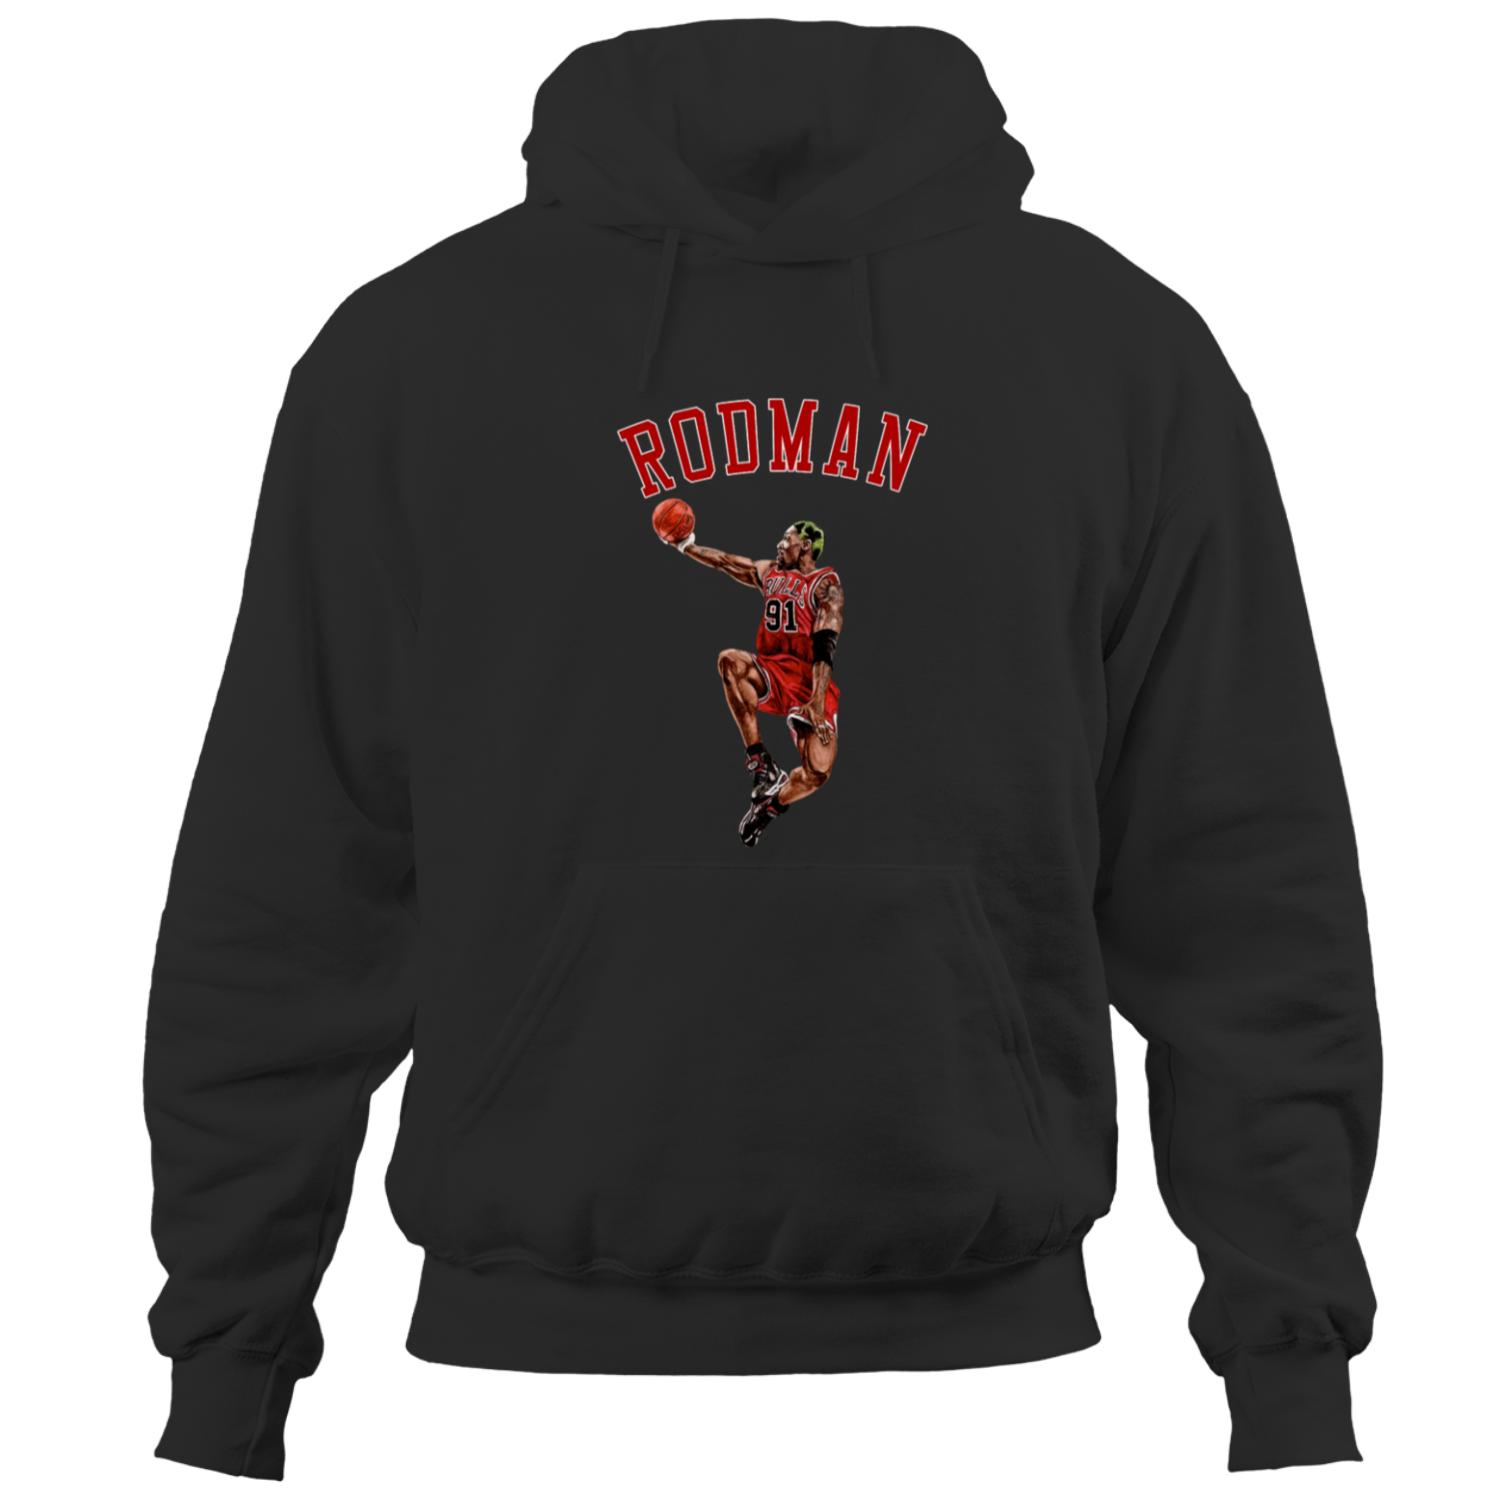 Rodman Red - Dennis Rodman - Hoodies